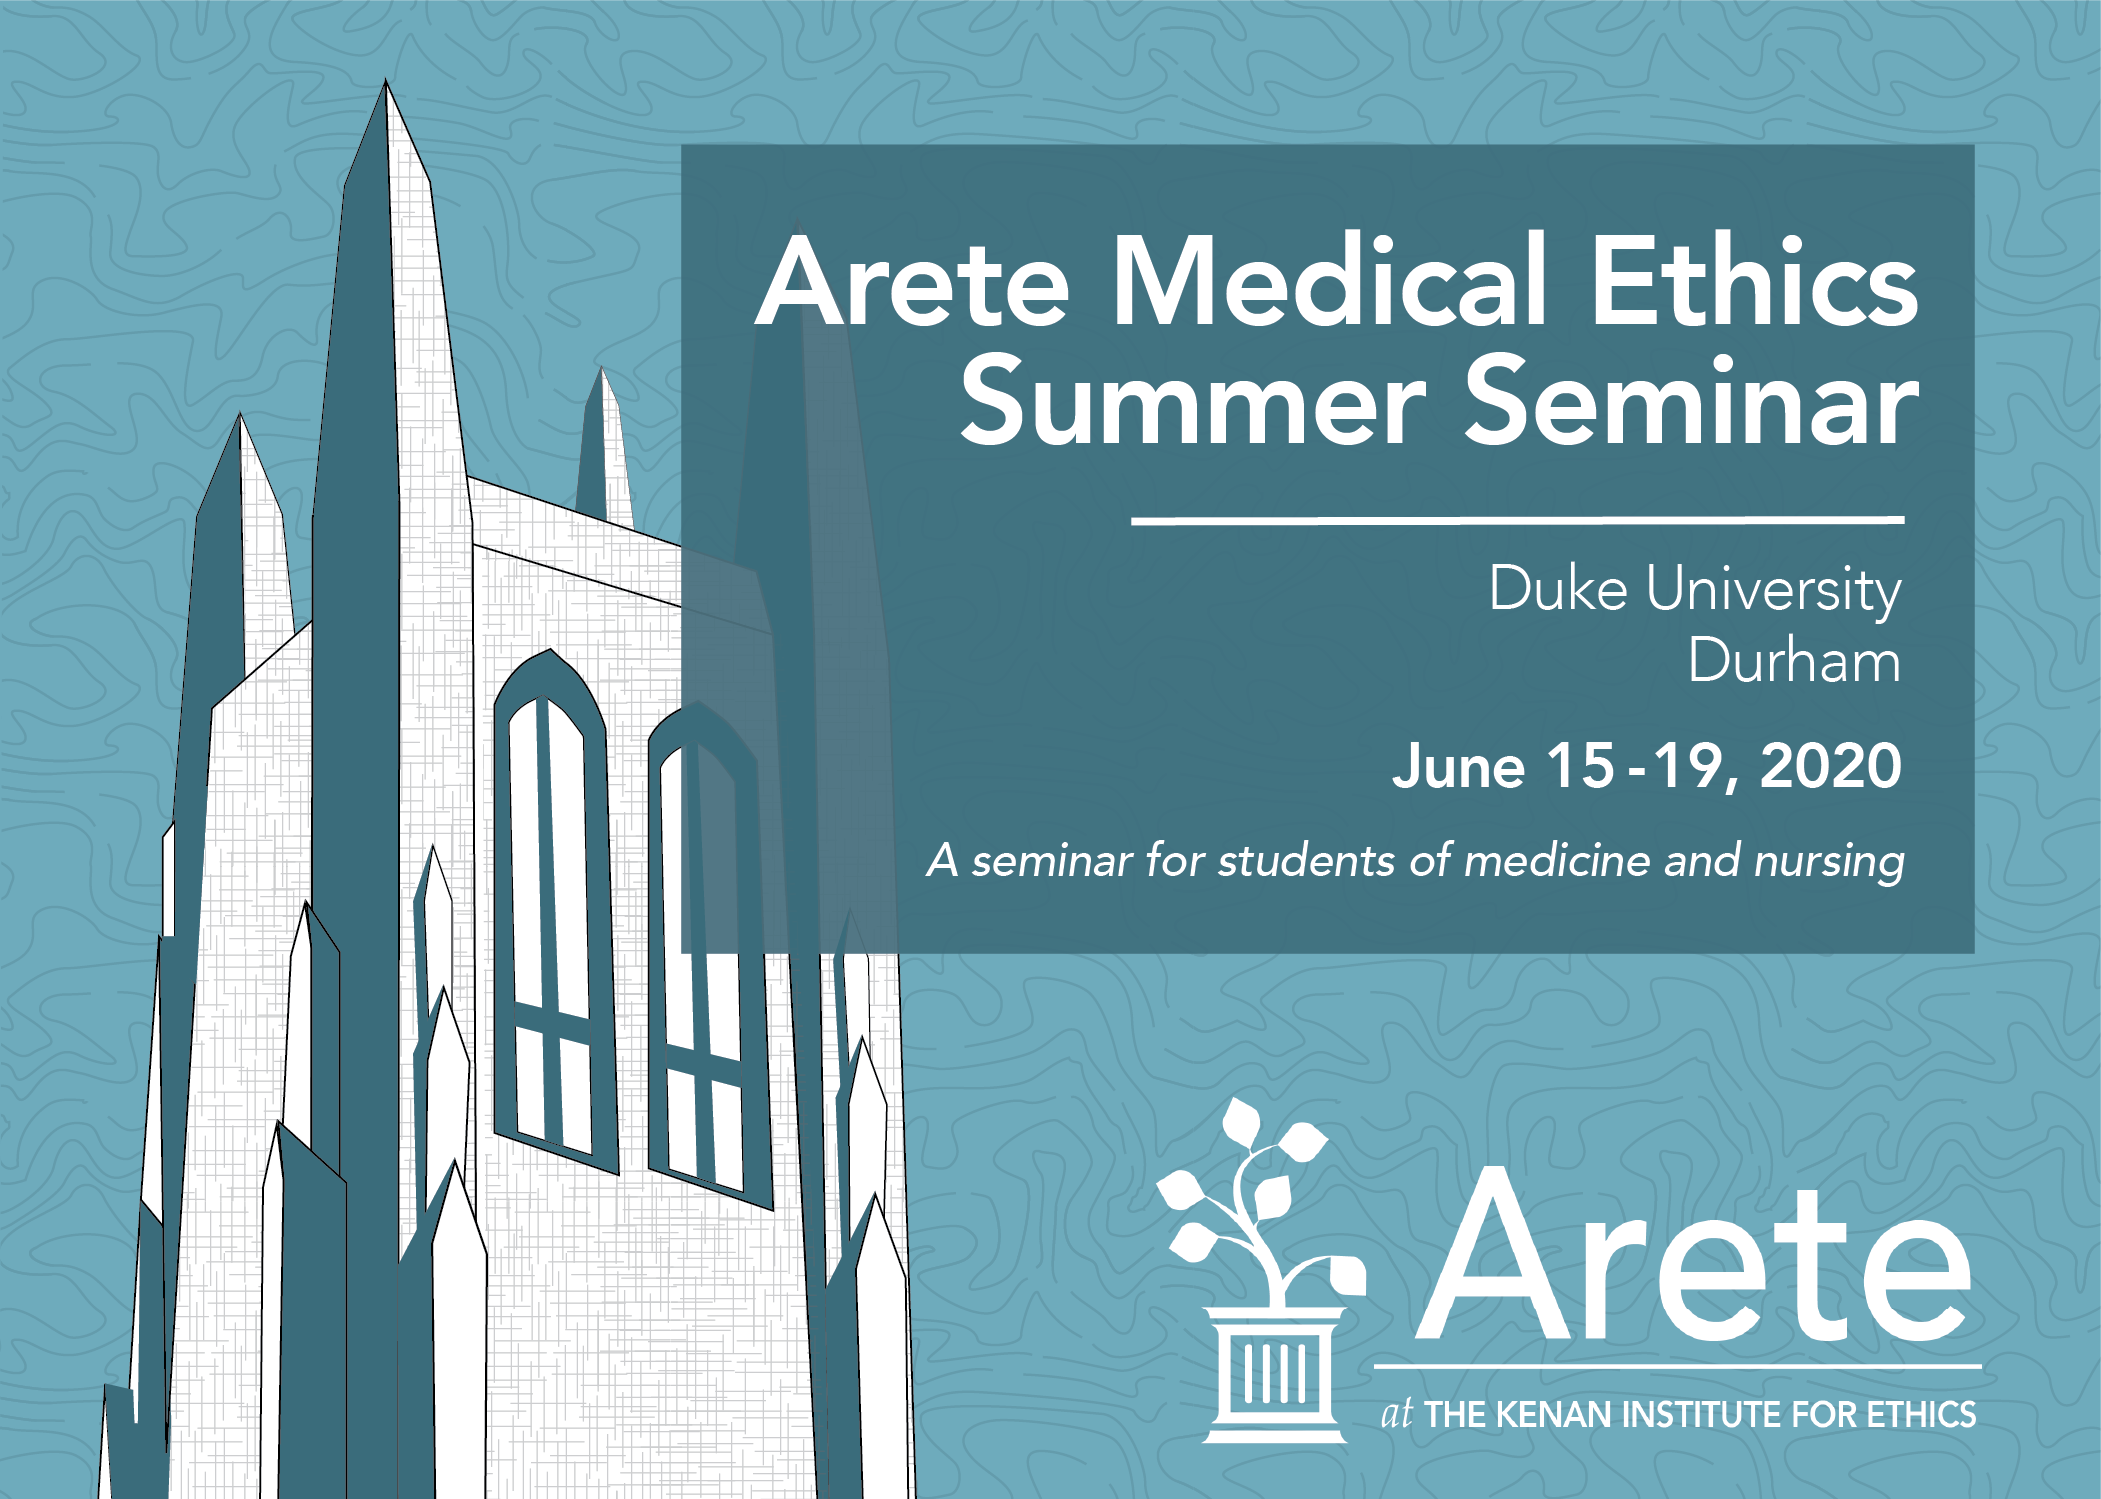 Arete Medical Ethics Summer Seminar, June 15th-19th 2020